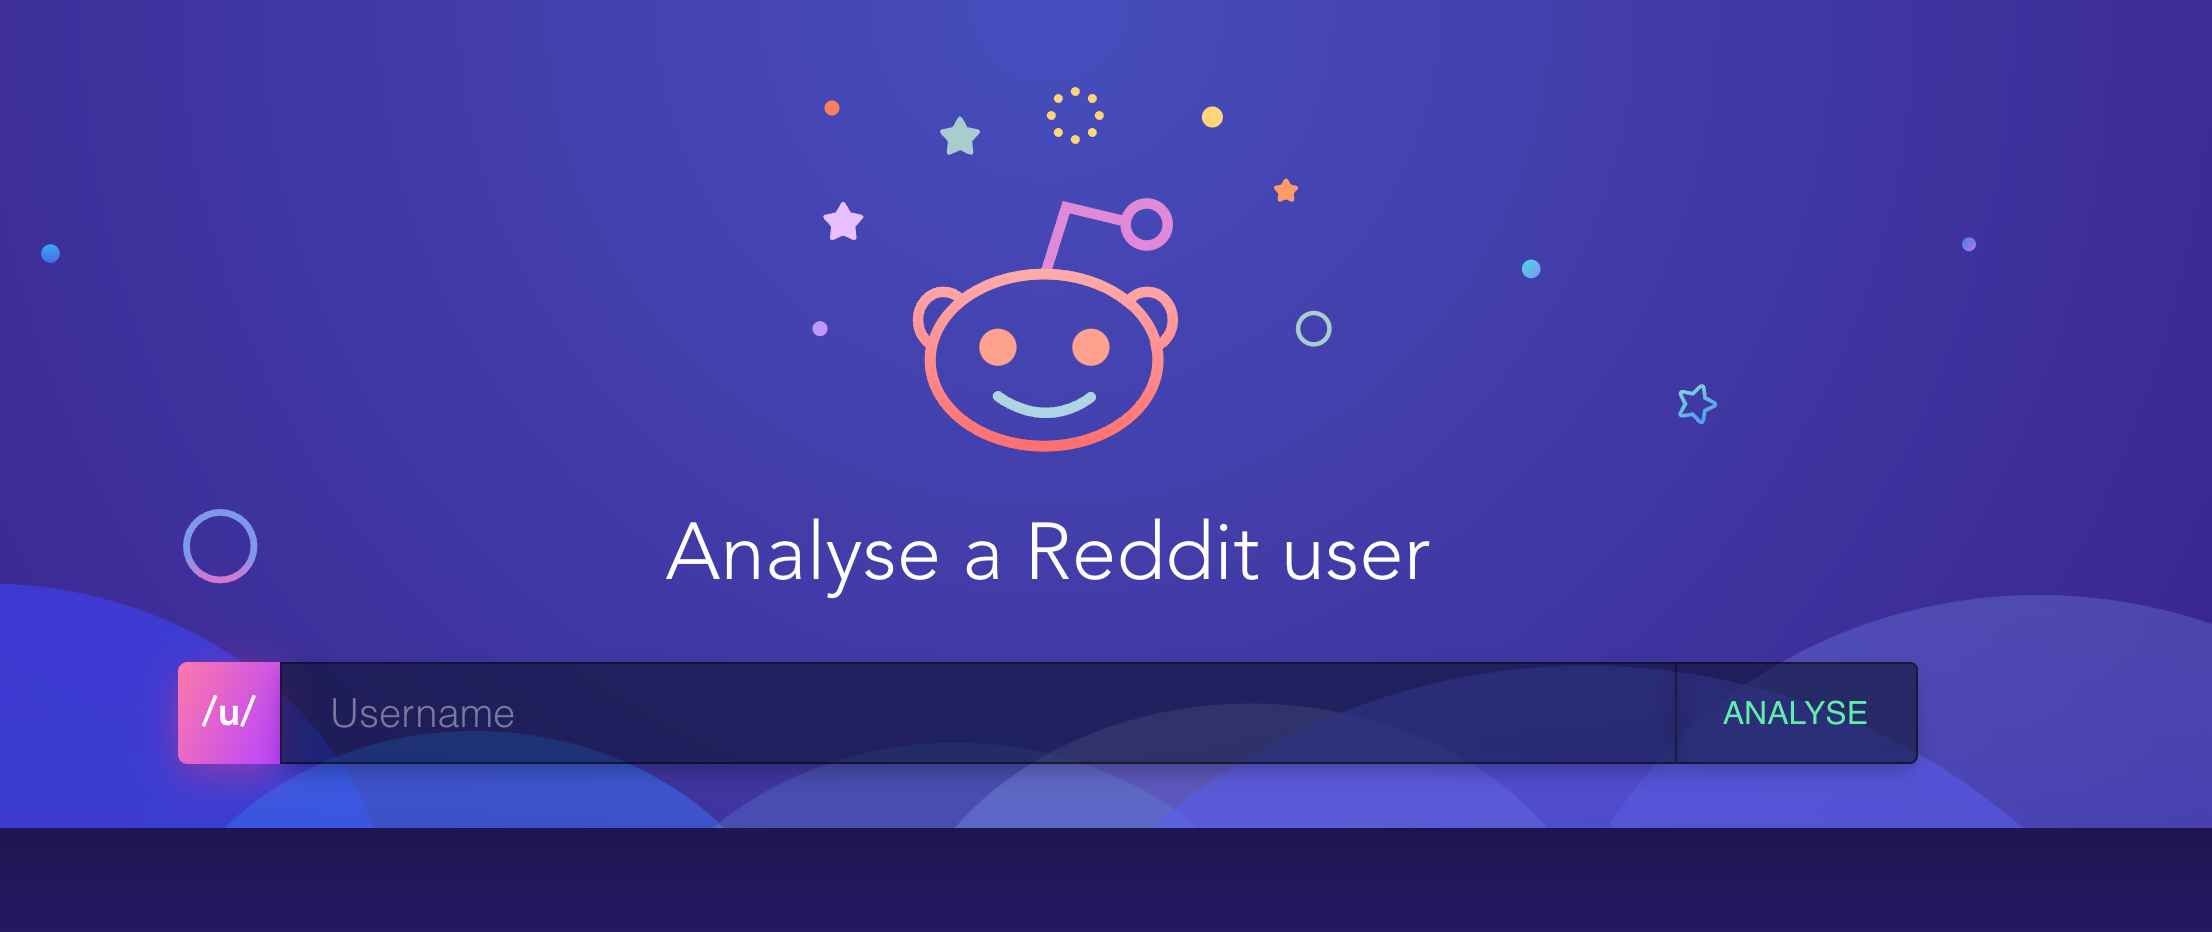 reddit user analyzer tool